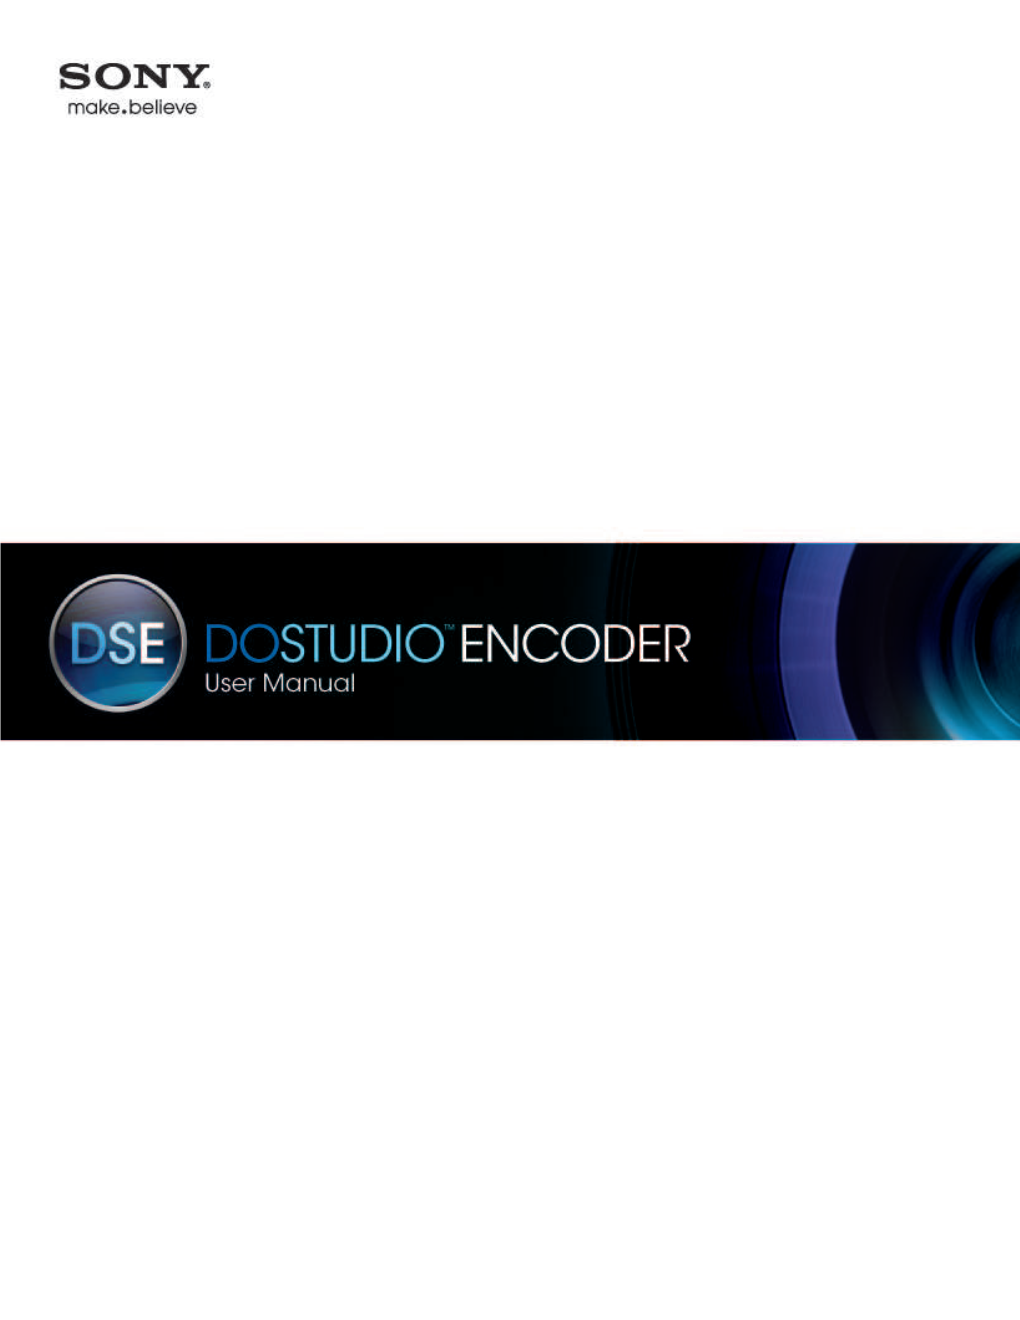 Dostudio Encoder 2.5 User Manual